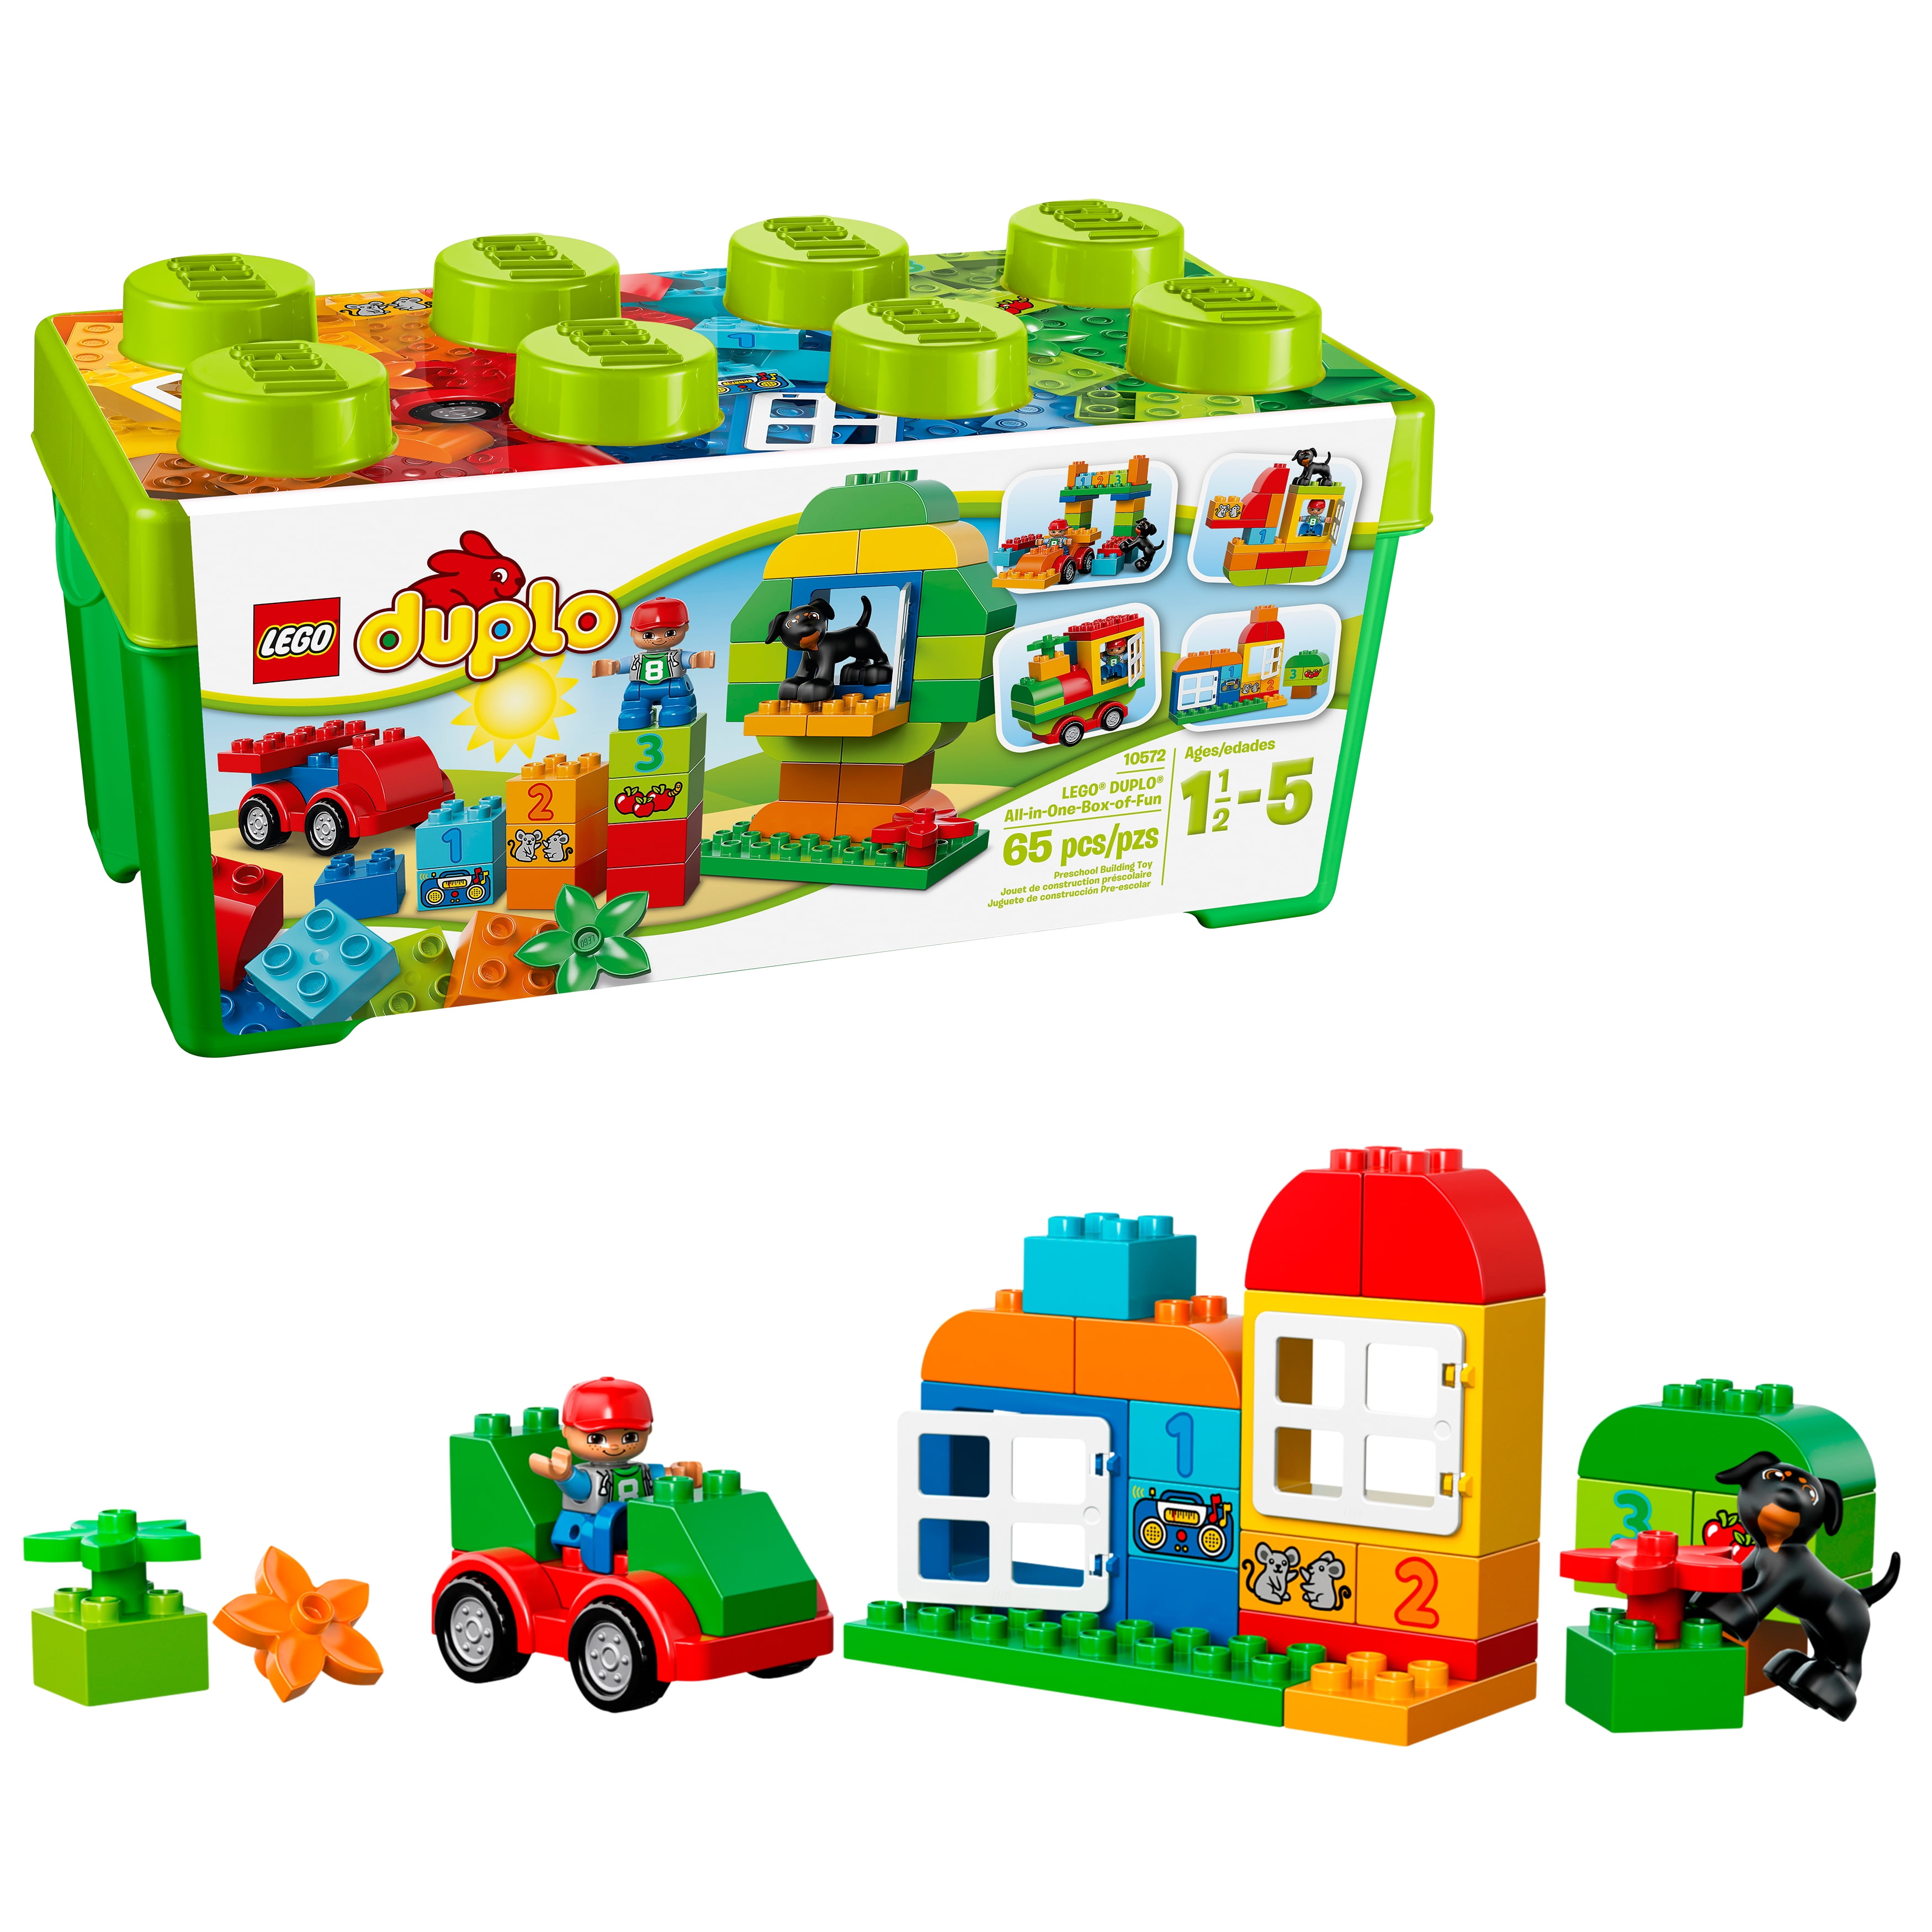 LEGO DUPLO NUMBER 10 Train Replacement 2 x 2 x 2 BLOCK Building Brick